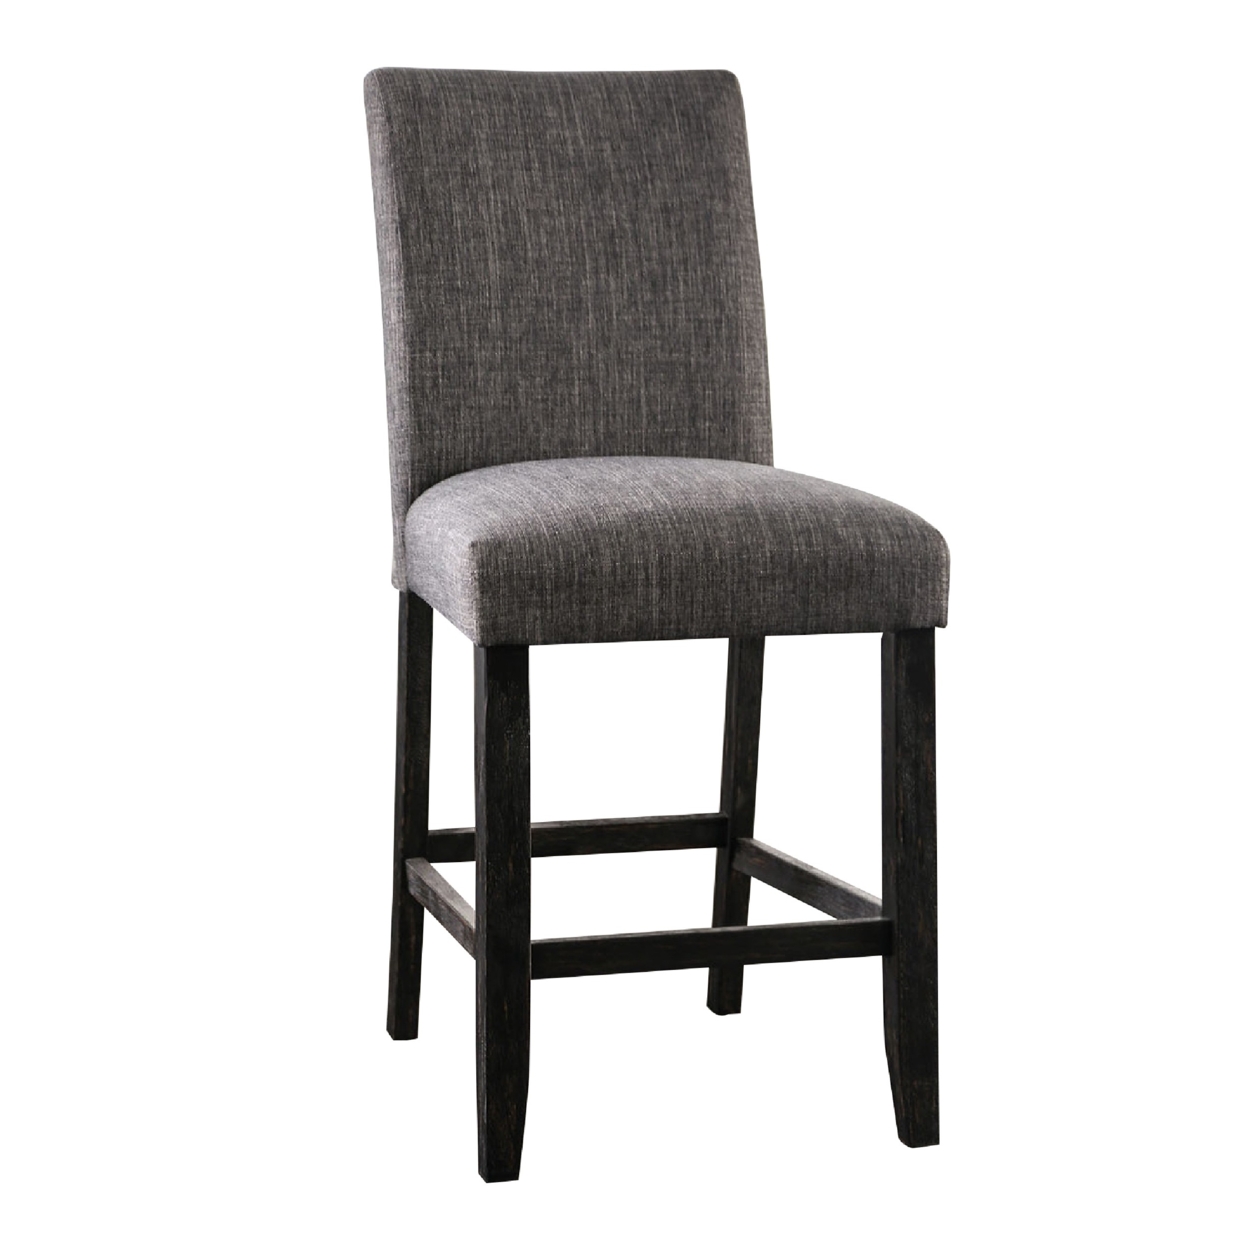 26 Inch Fabric Counter Height Dining Chair, Wood Legs, Gray- Saltoro Sherpi